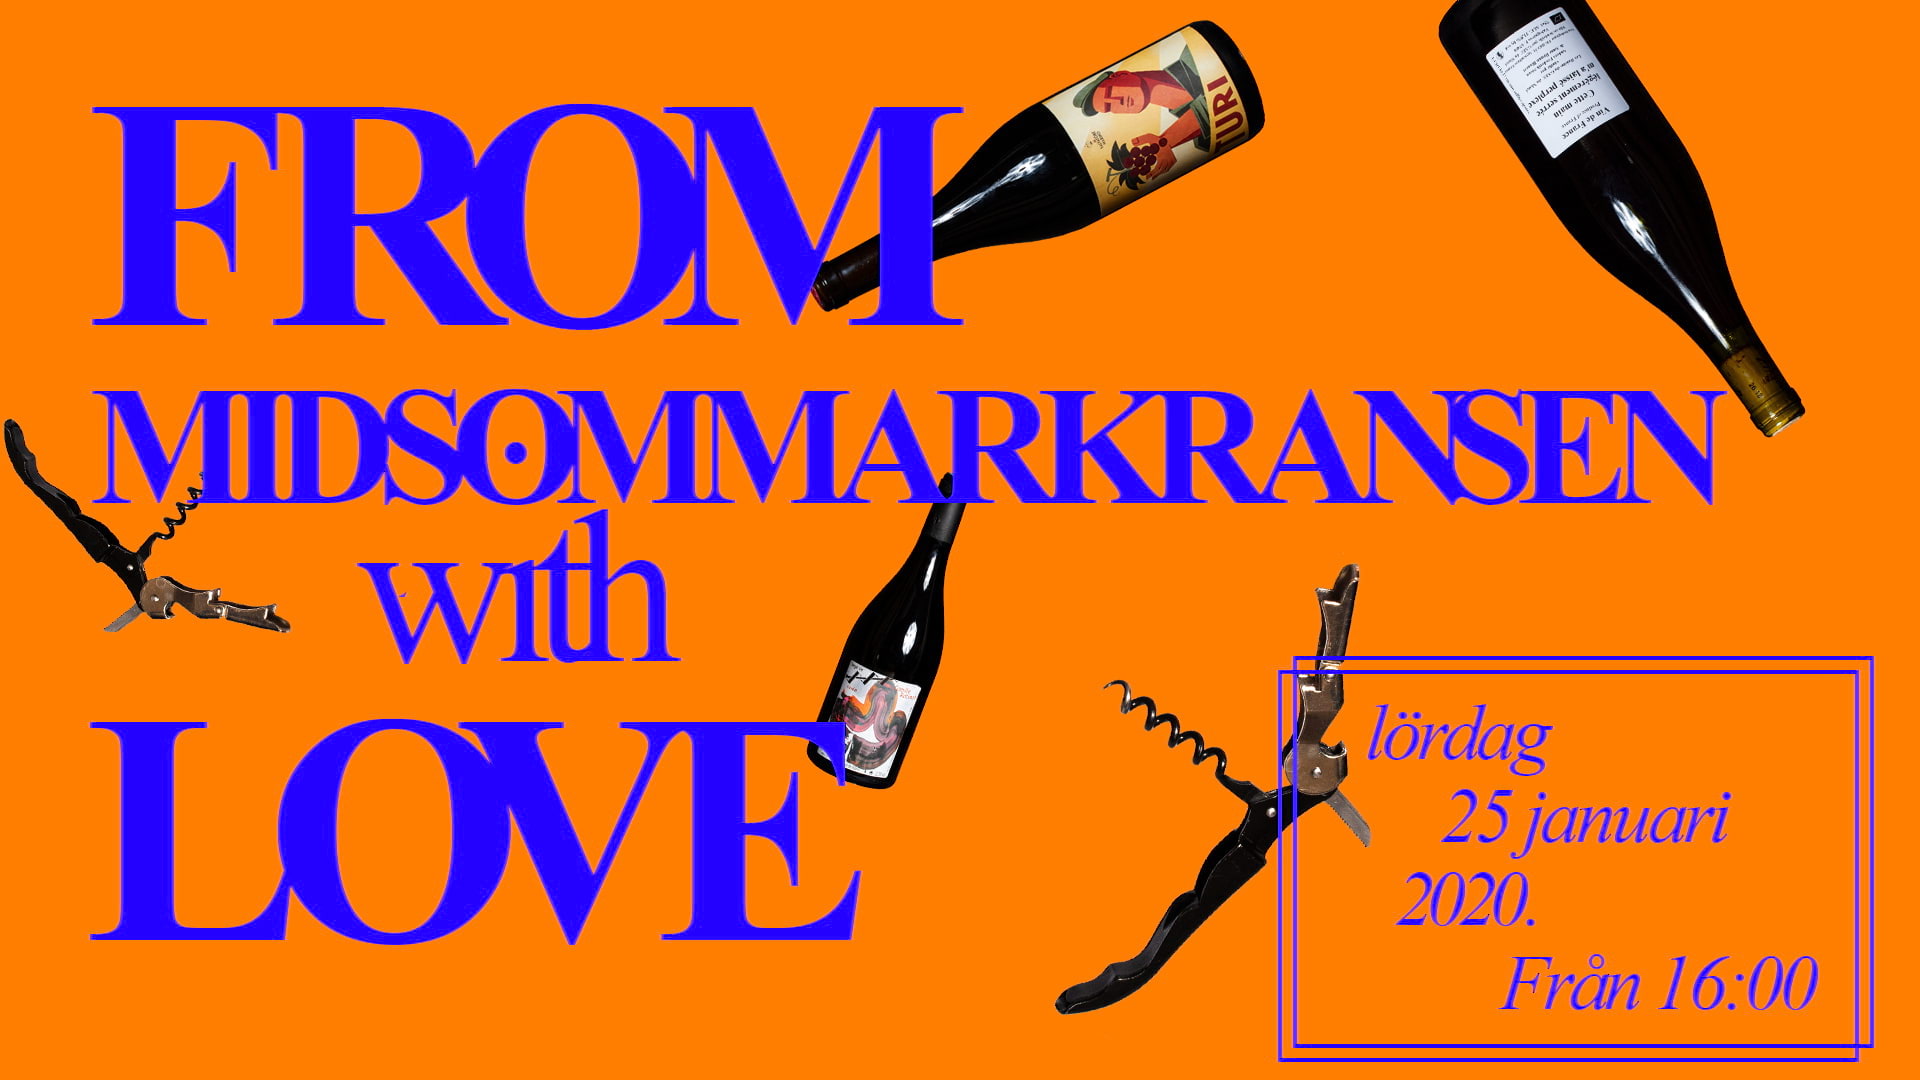 From Midsommarkransen with Love